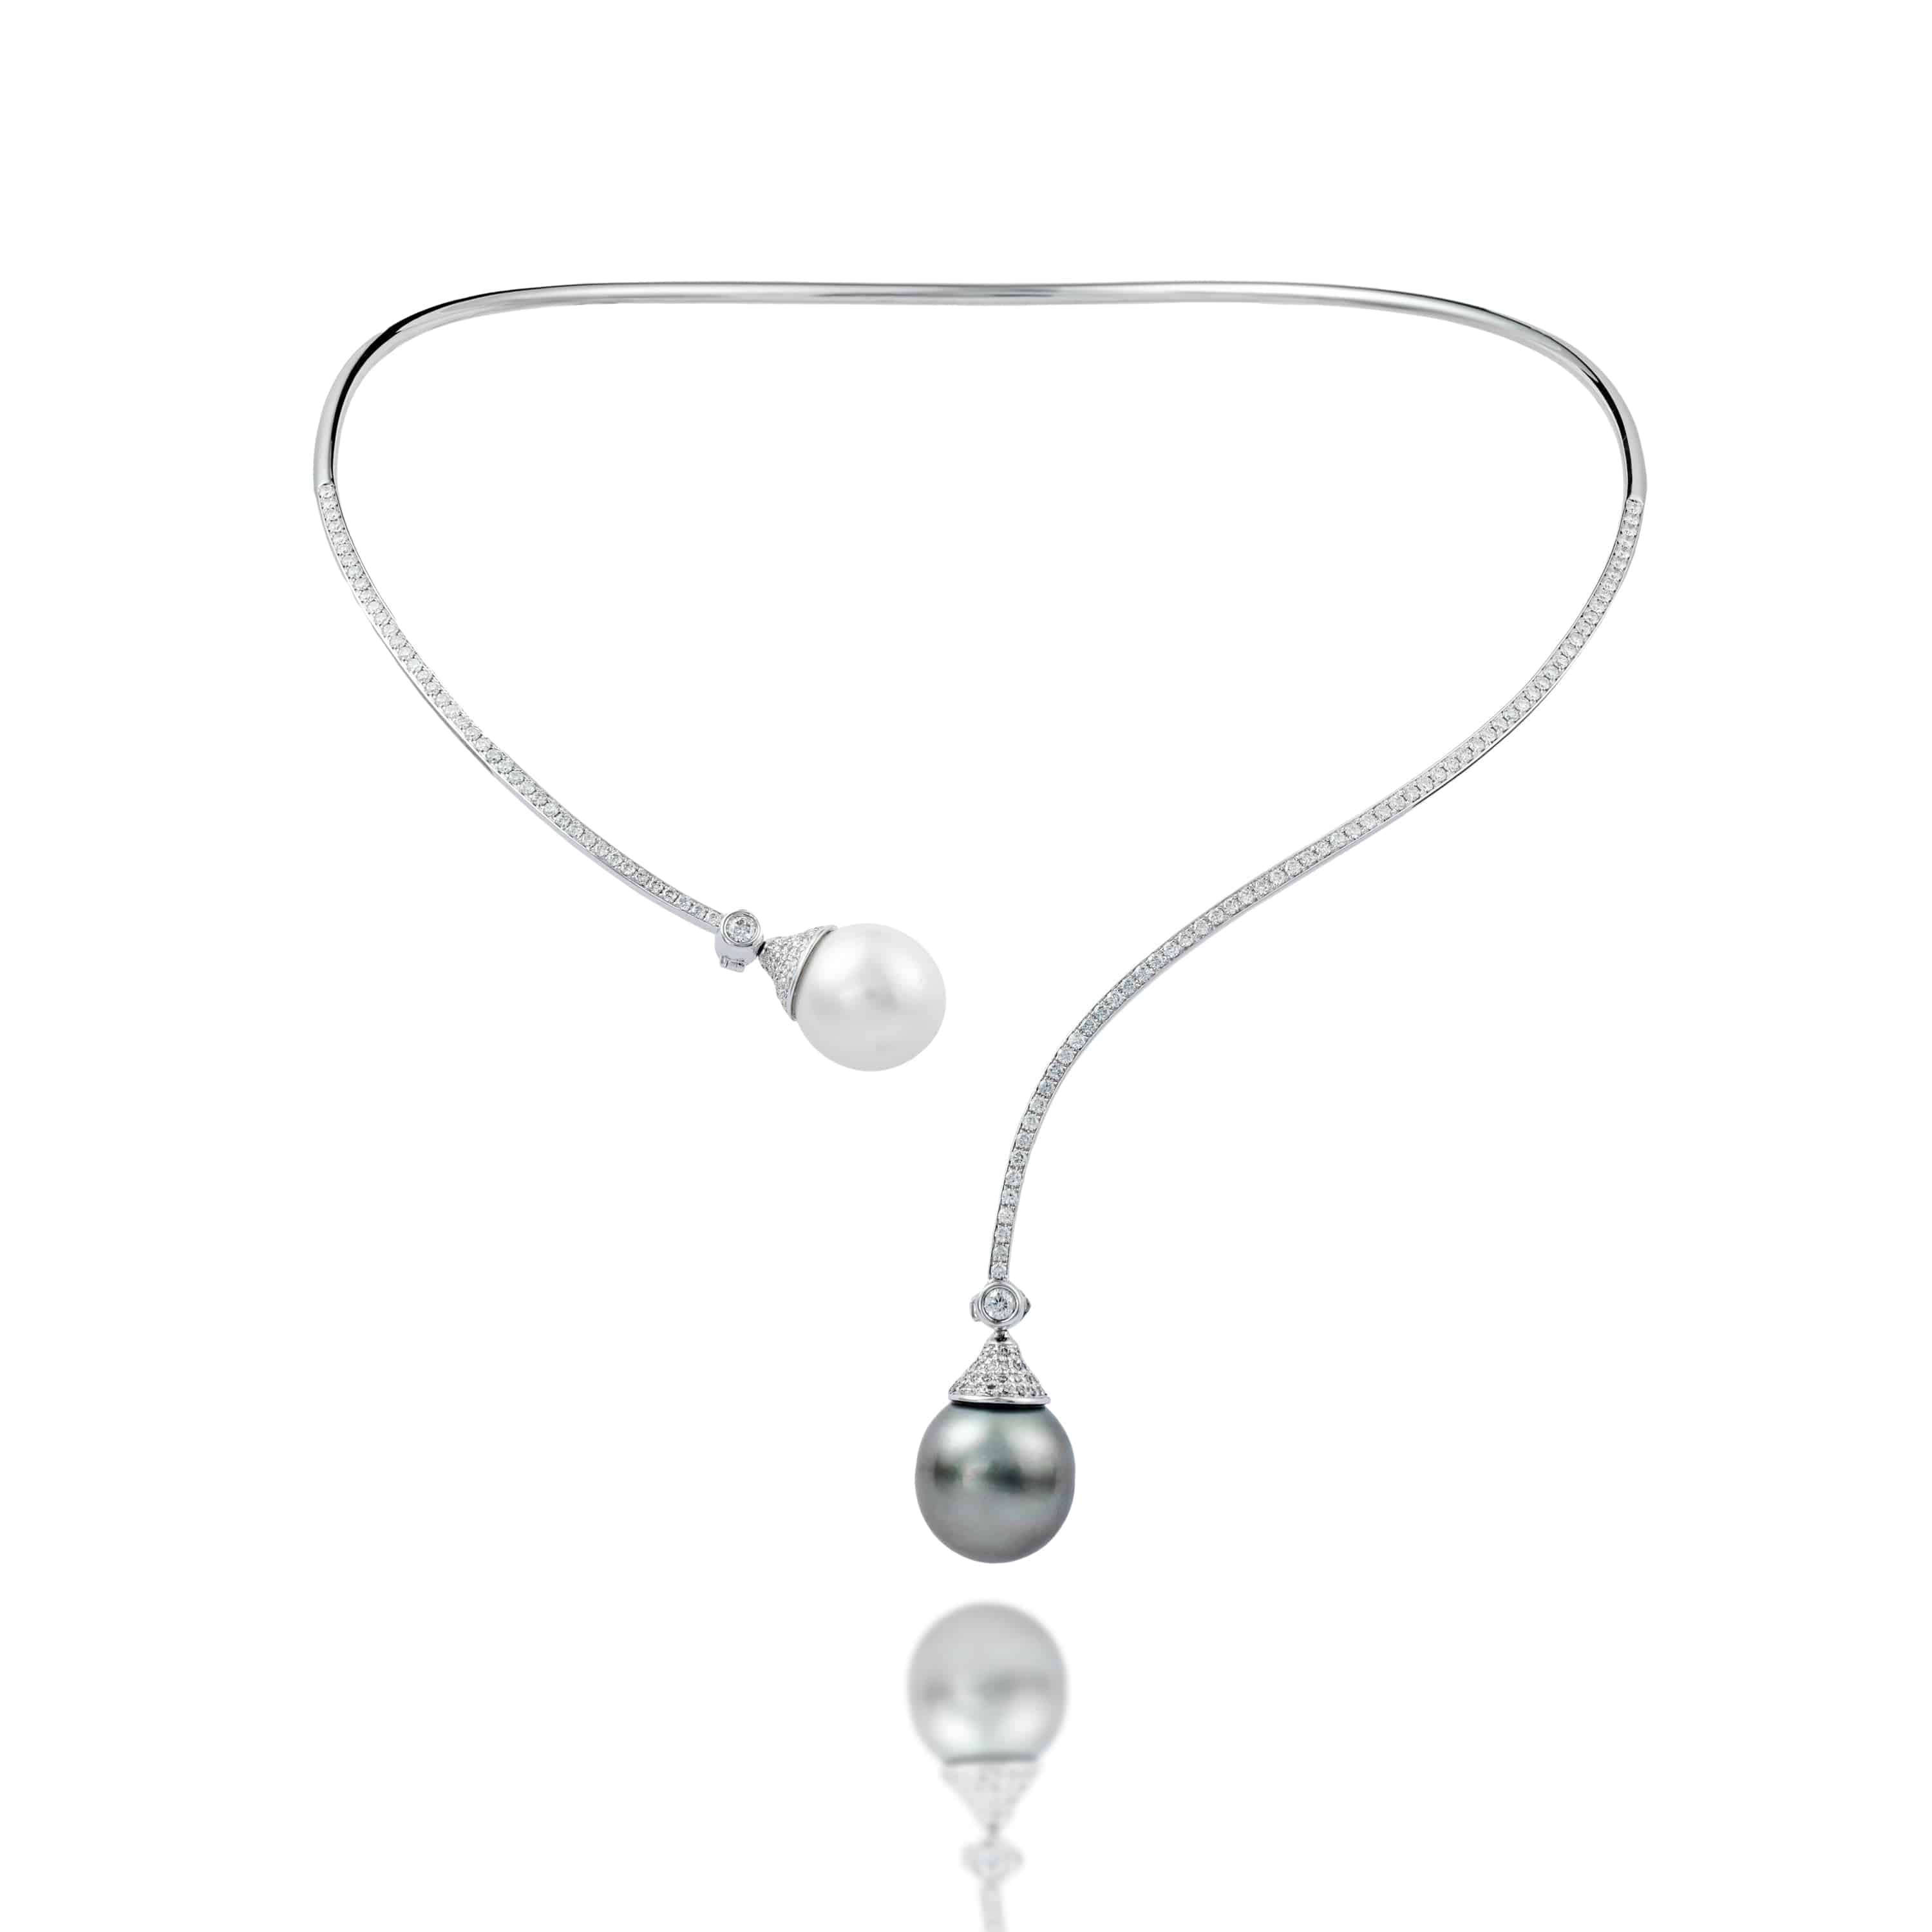 transformational-diamond-south-sea-pearl-necklace-earrings-43627967807652.jpg